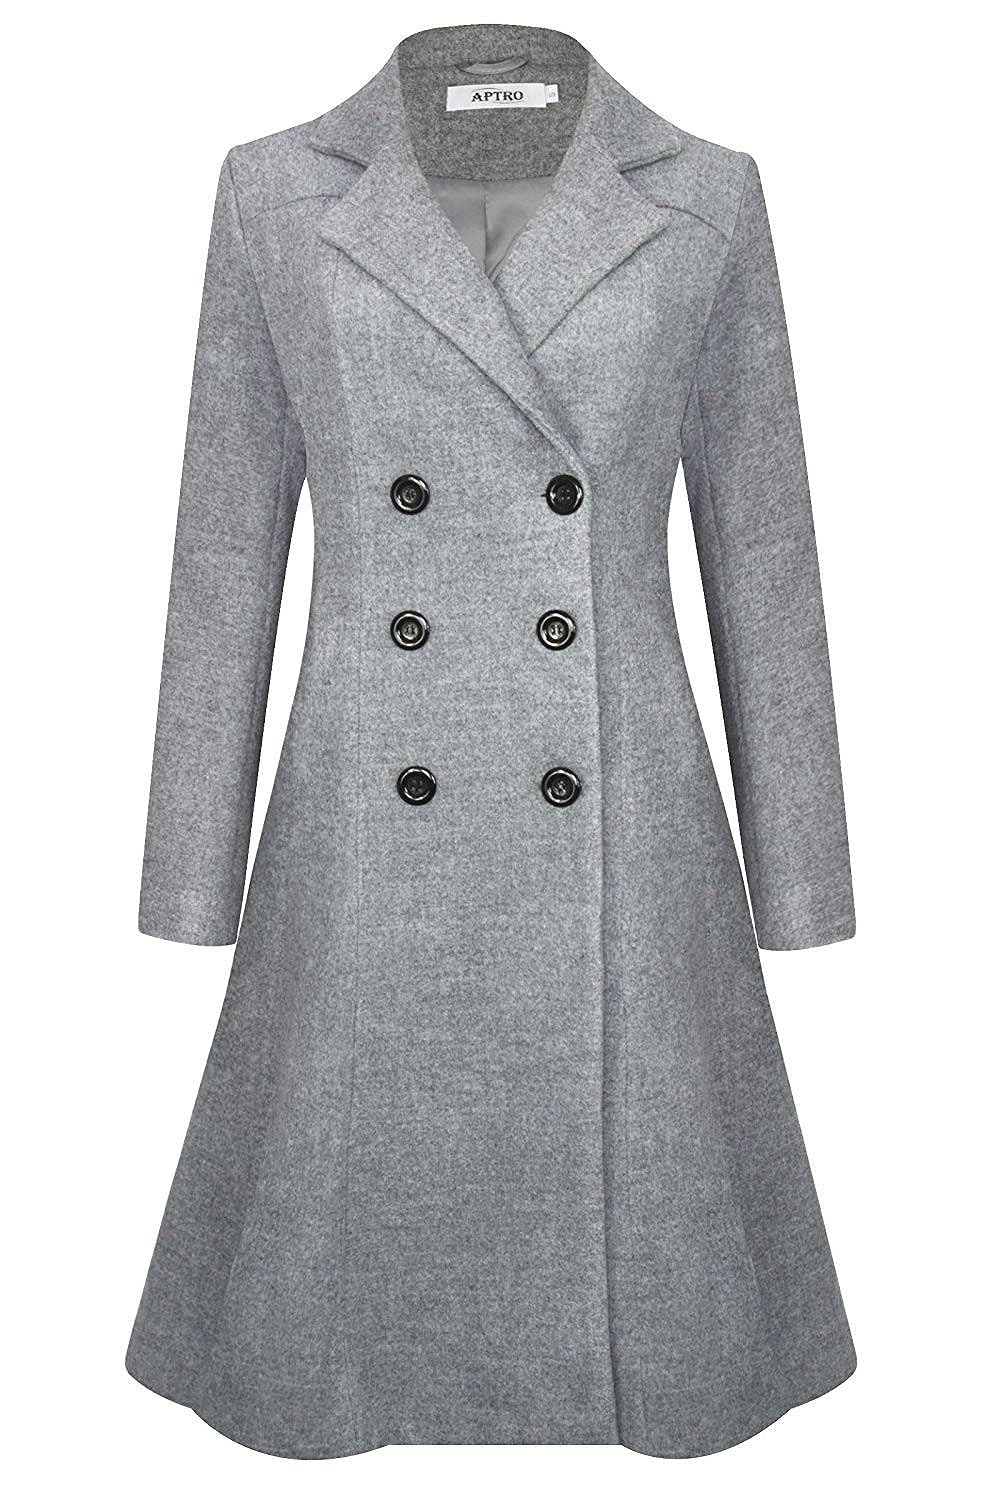 Long vintage womens coat